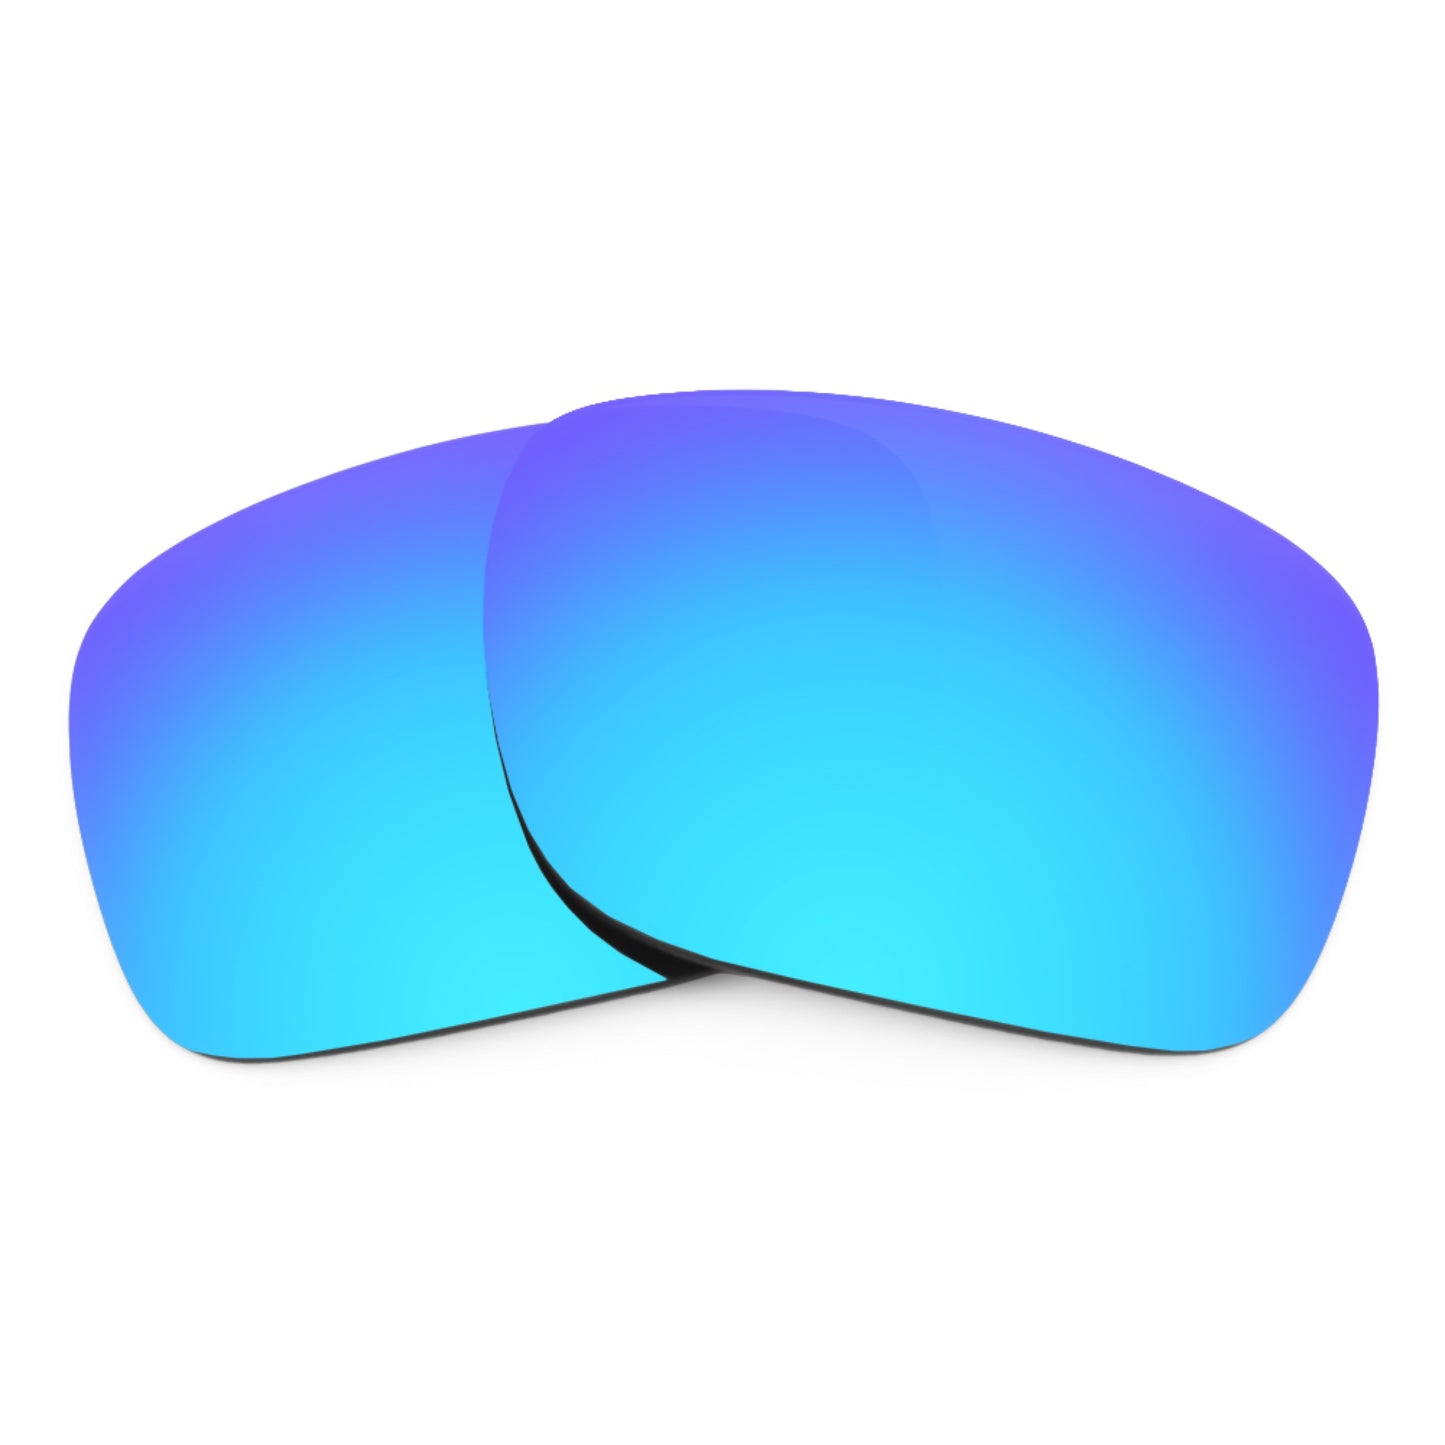 Revant replacement lenses for Oakley Crossrange (Low Bridge Fit) Non-Polarized Ice Blue